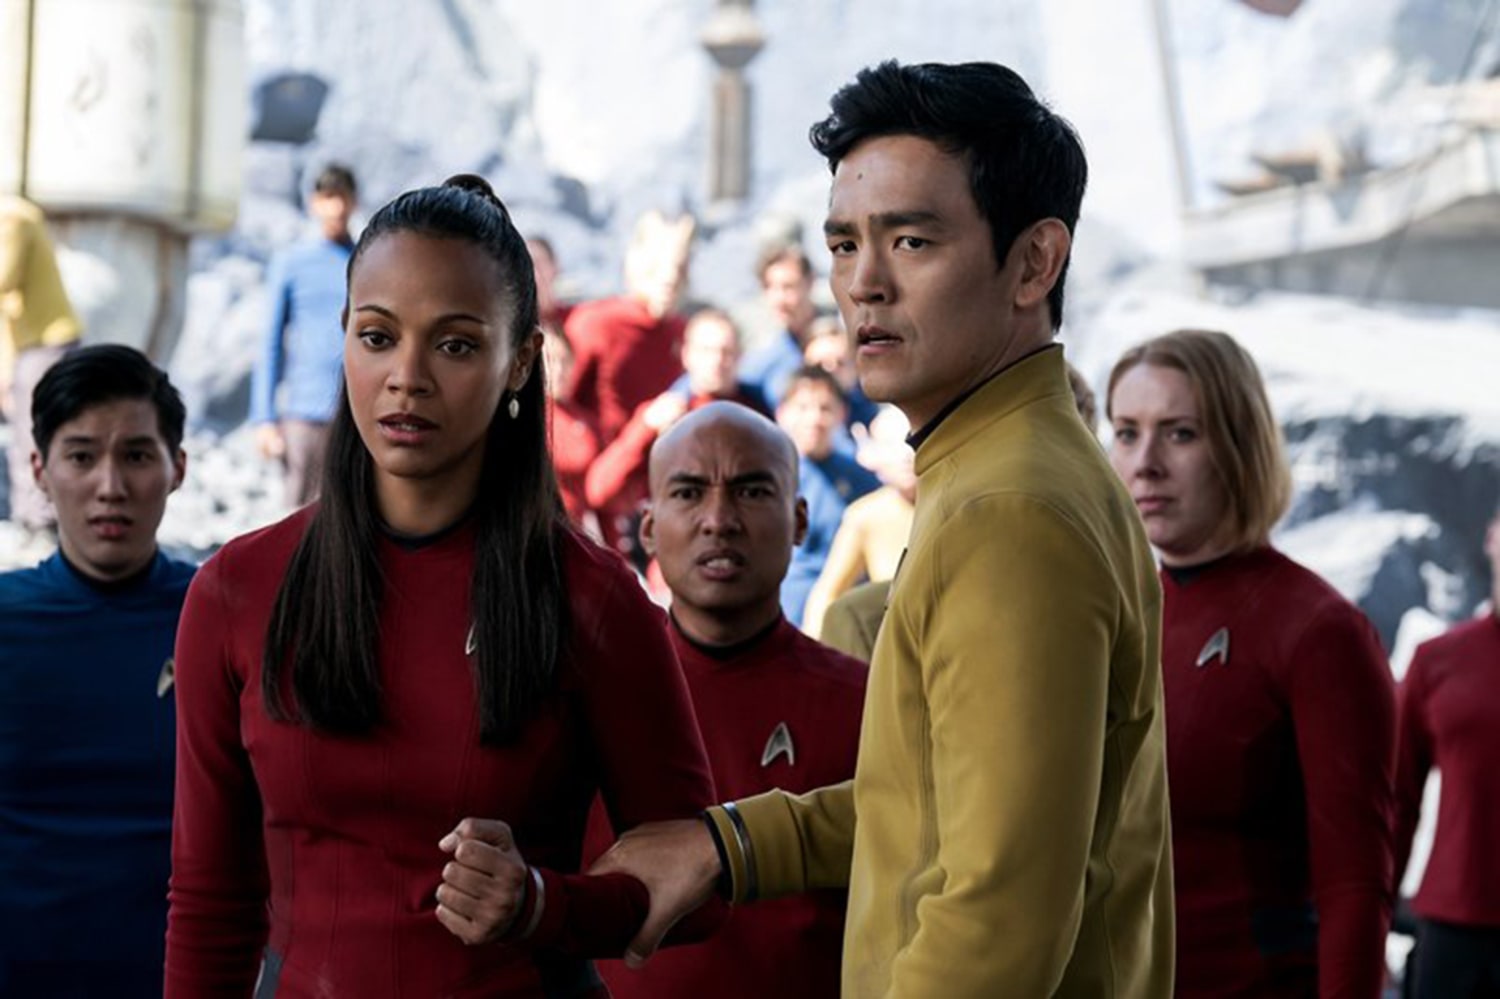 Gay 'Star Trek' Character Provokes Polarizing Response